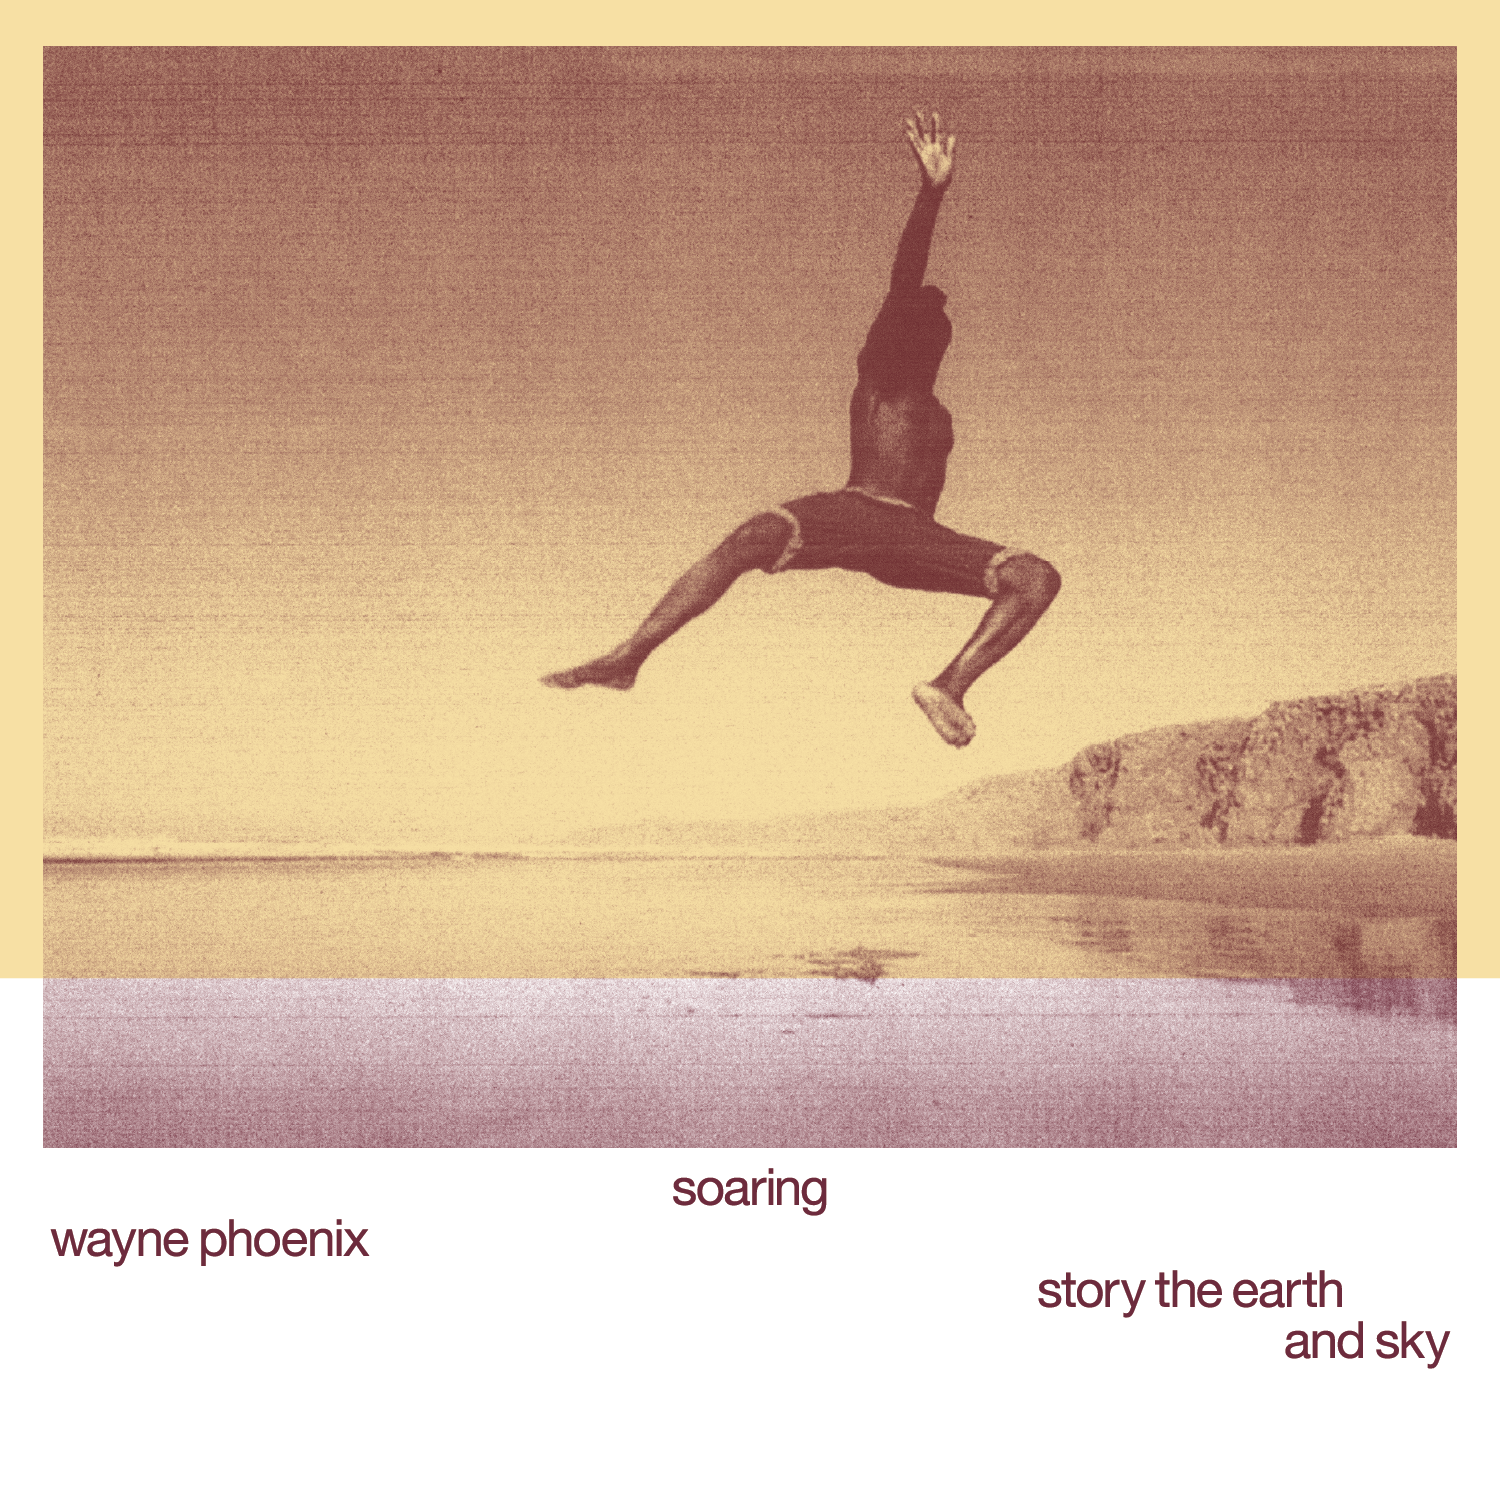 Wayne Phoenix – soaring wayne phoenix story the earth and sky